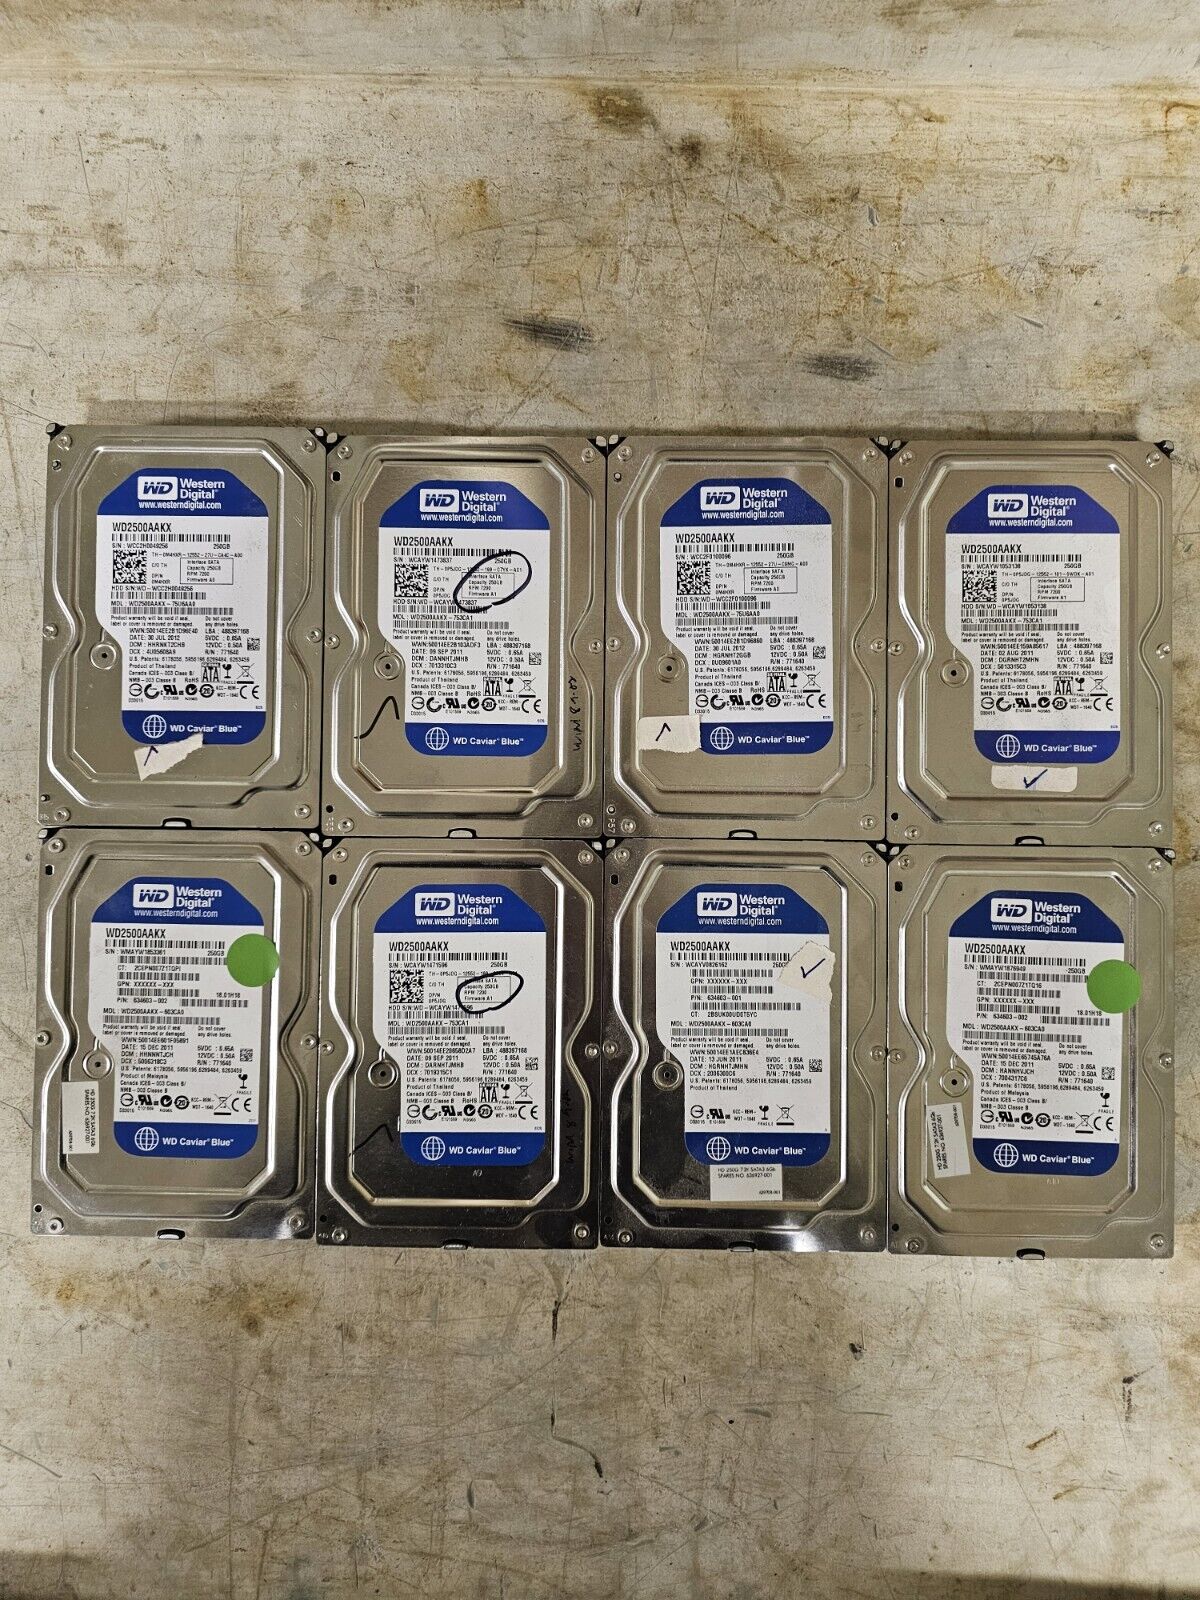 Lot of 8 Western Digital Caviar Blue 250GB Internal Desktop HardDrive WD2500AAKX